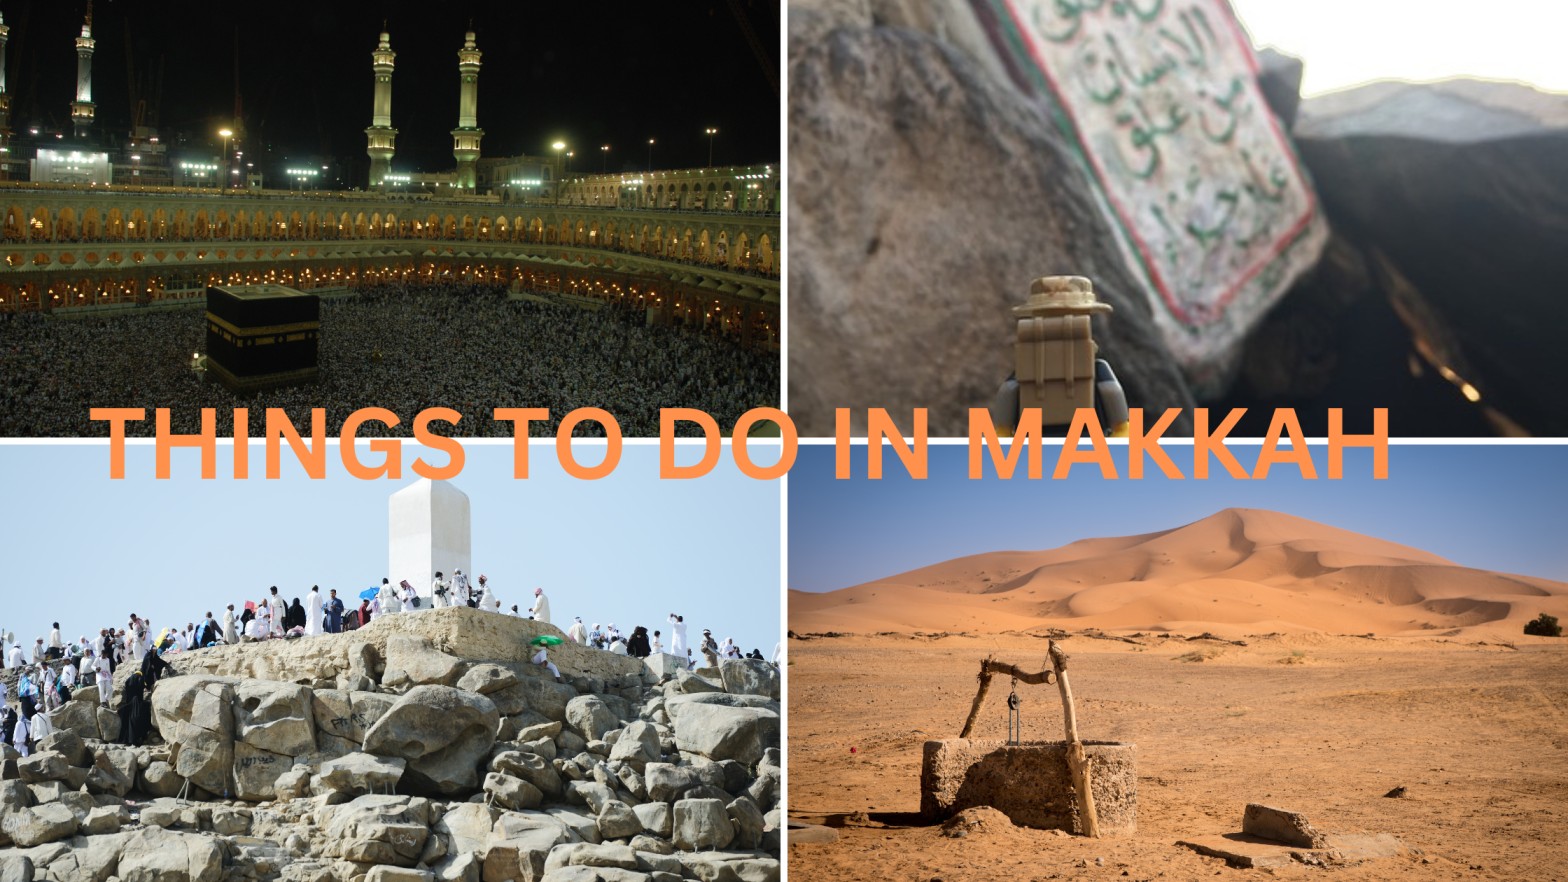 THINGS TO DO IN MAKKAH